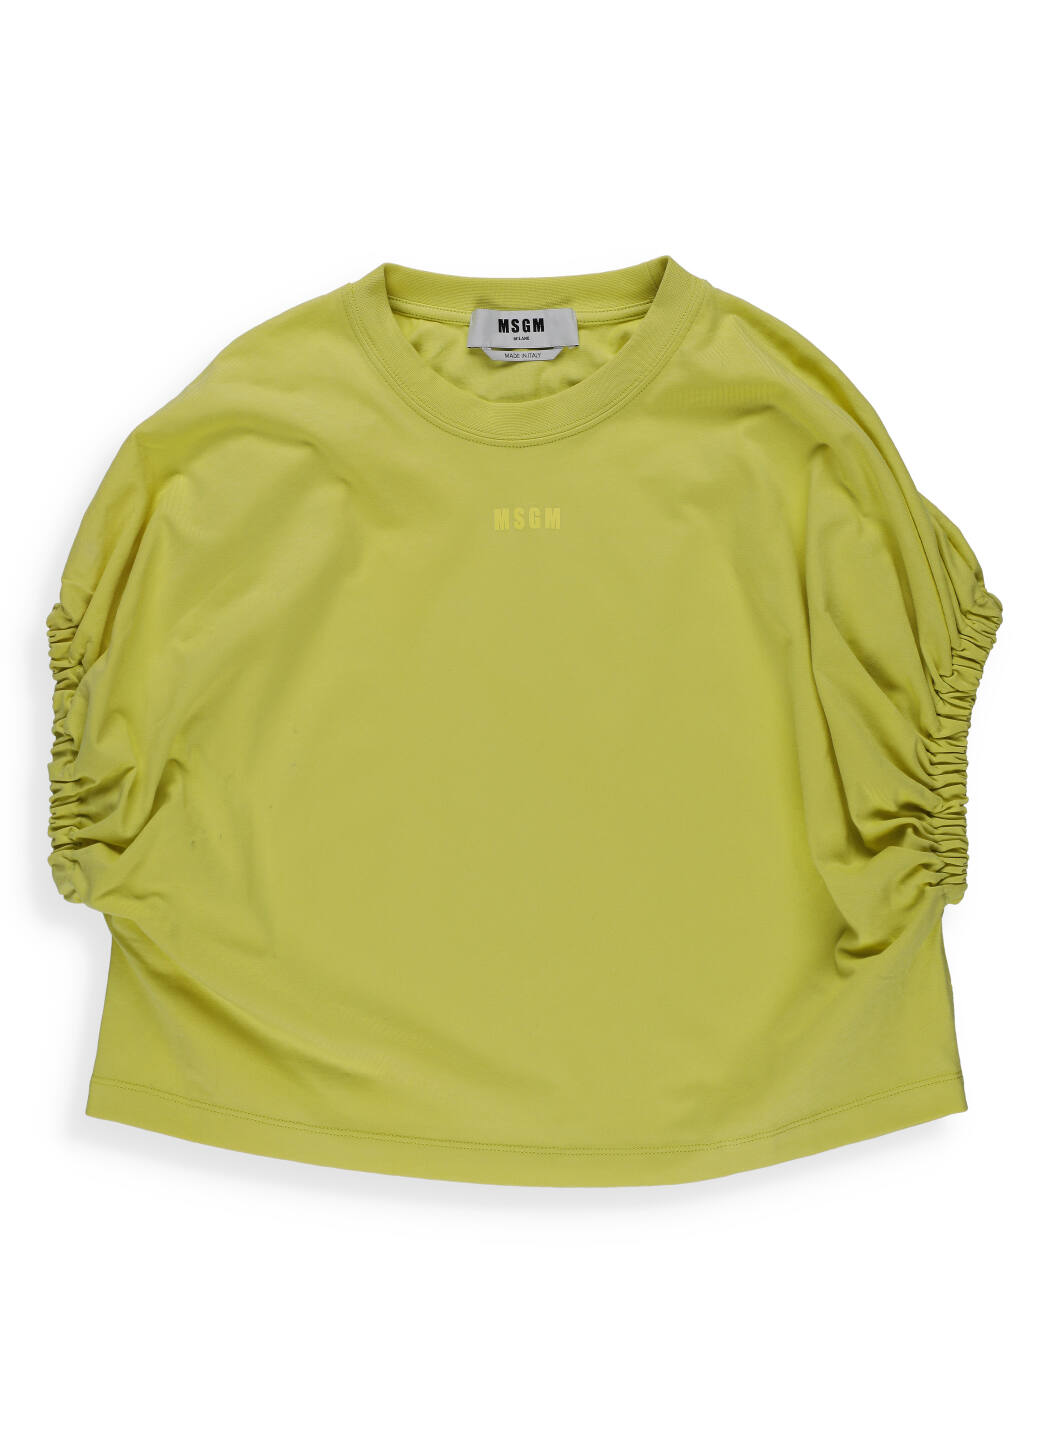 Msgm Cotton Cropeed T-shirt In Lemon Yellow